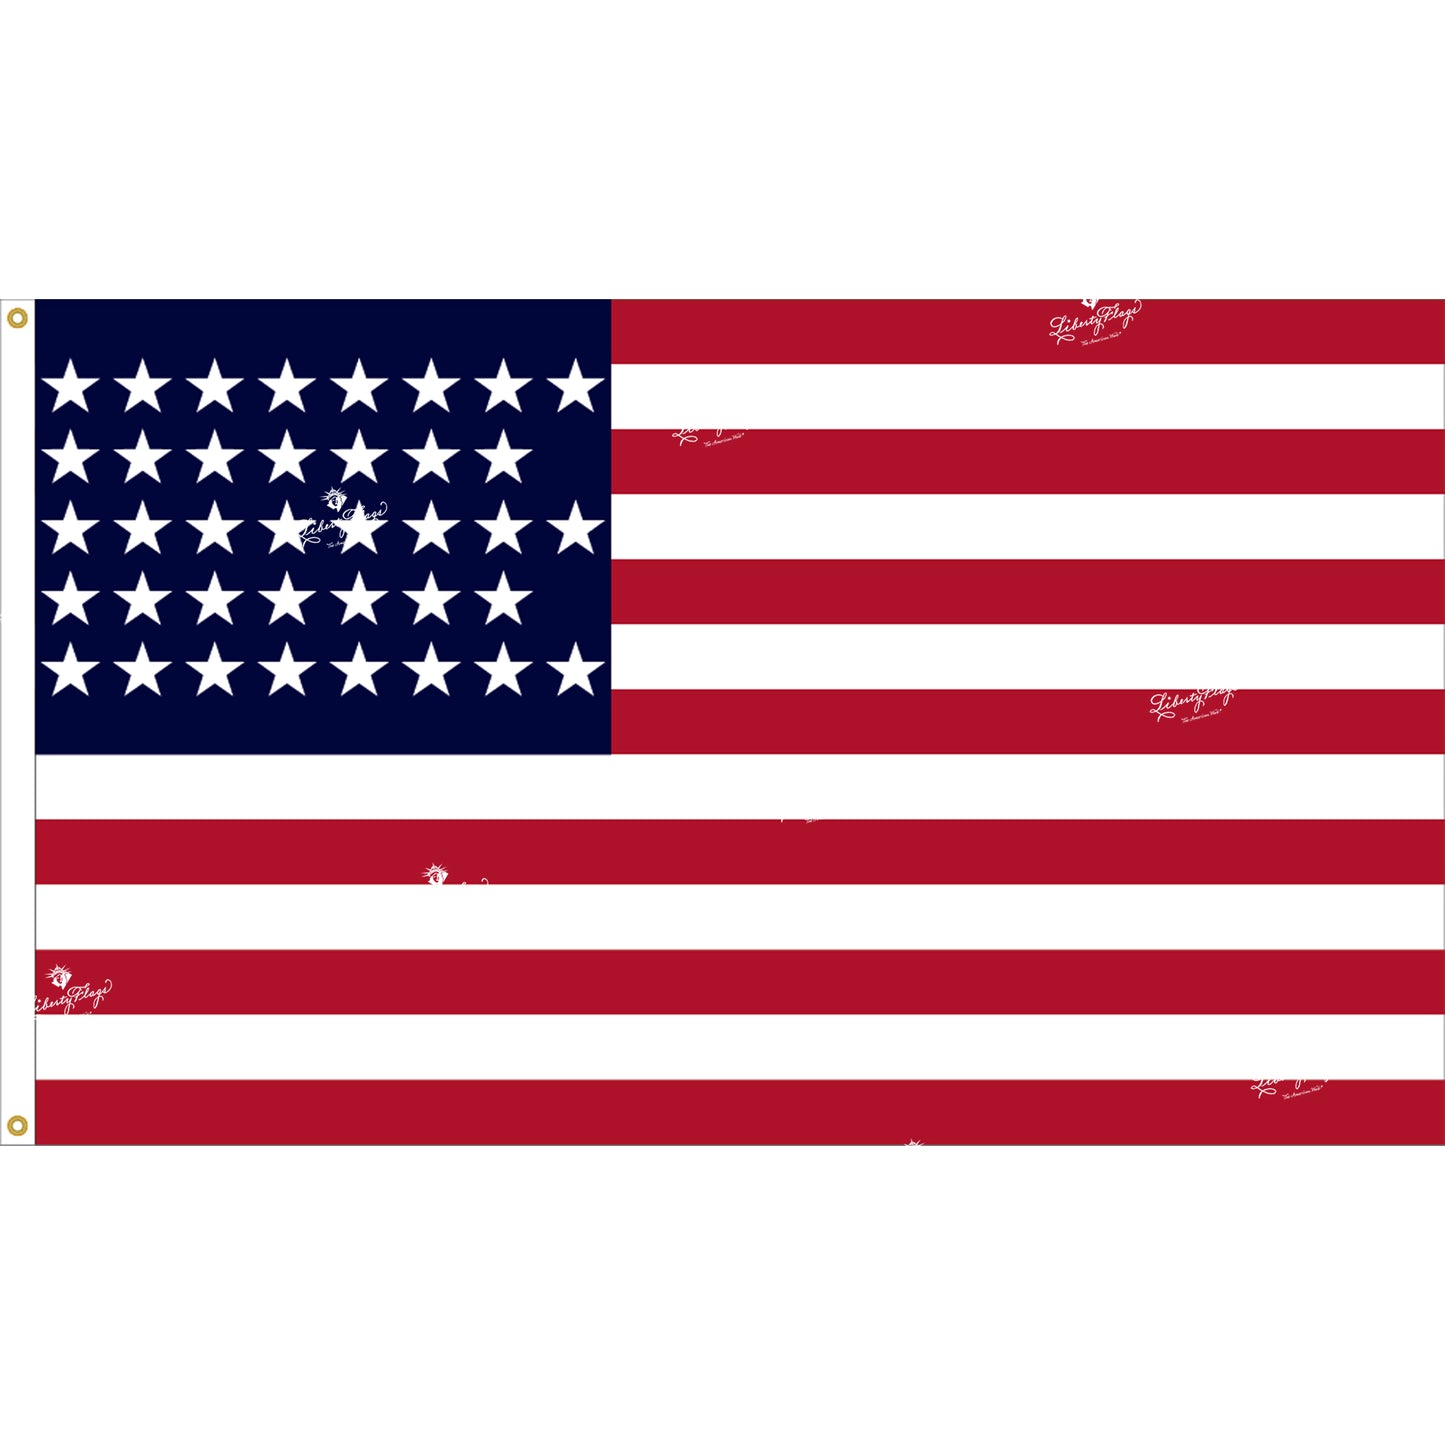 38 Star Outdoor Historic U.S. Flags